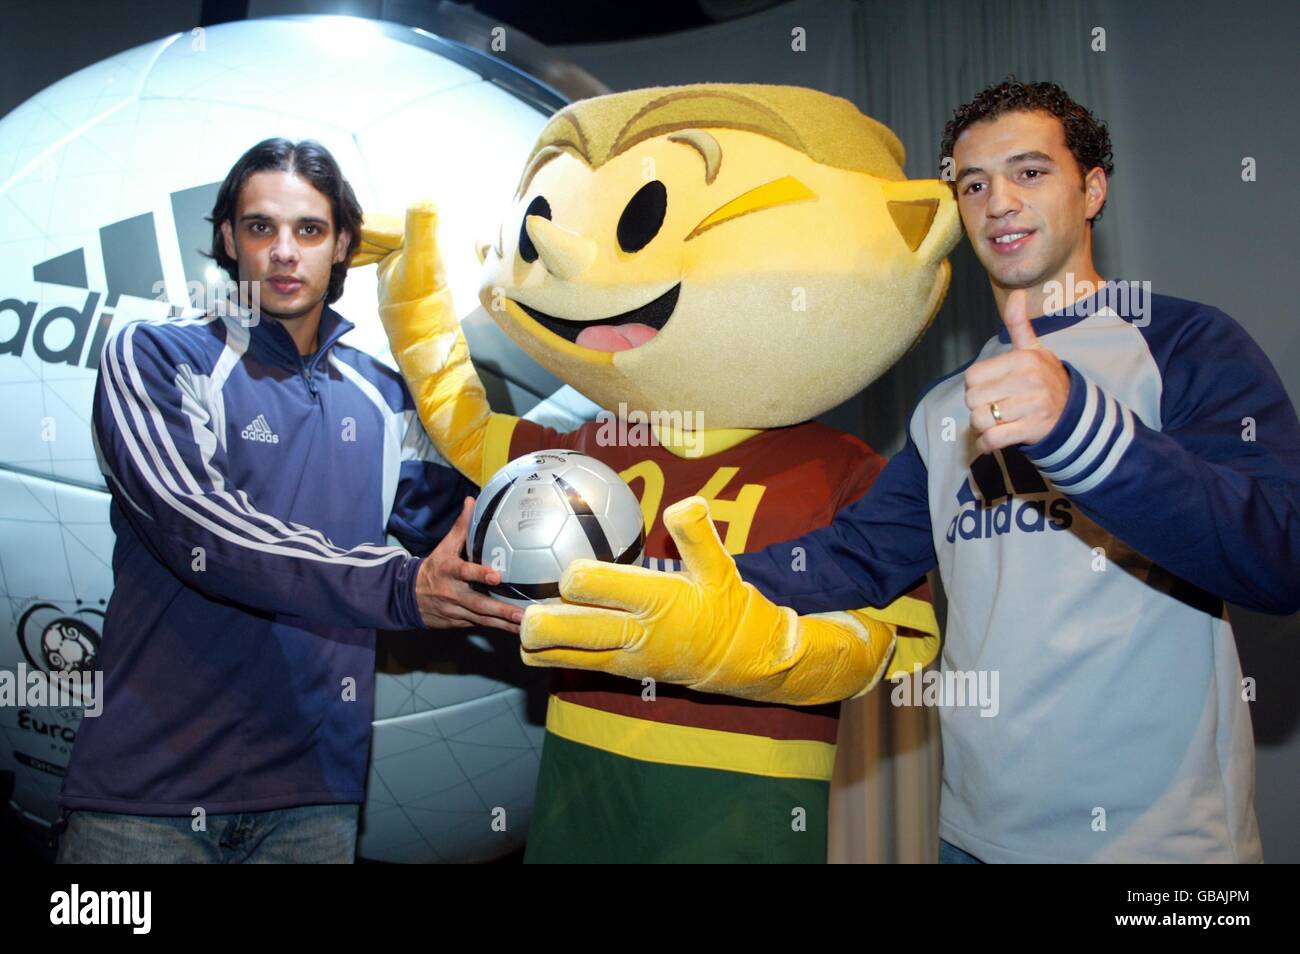 The Portugal mascot for the Euro 2004 Championships Kinas with players Nuno  Gomes and Simao Sabrosa and the new Adidas matchball Stock Photo - Alamy